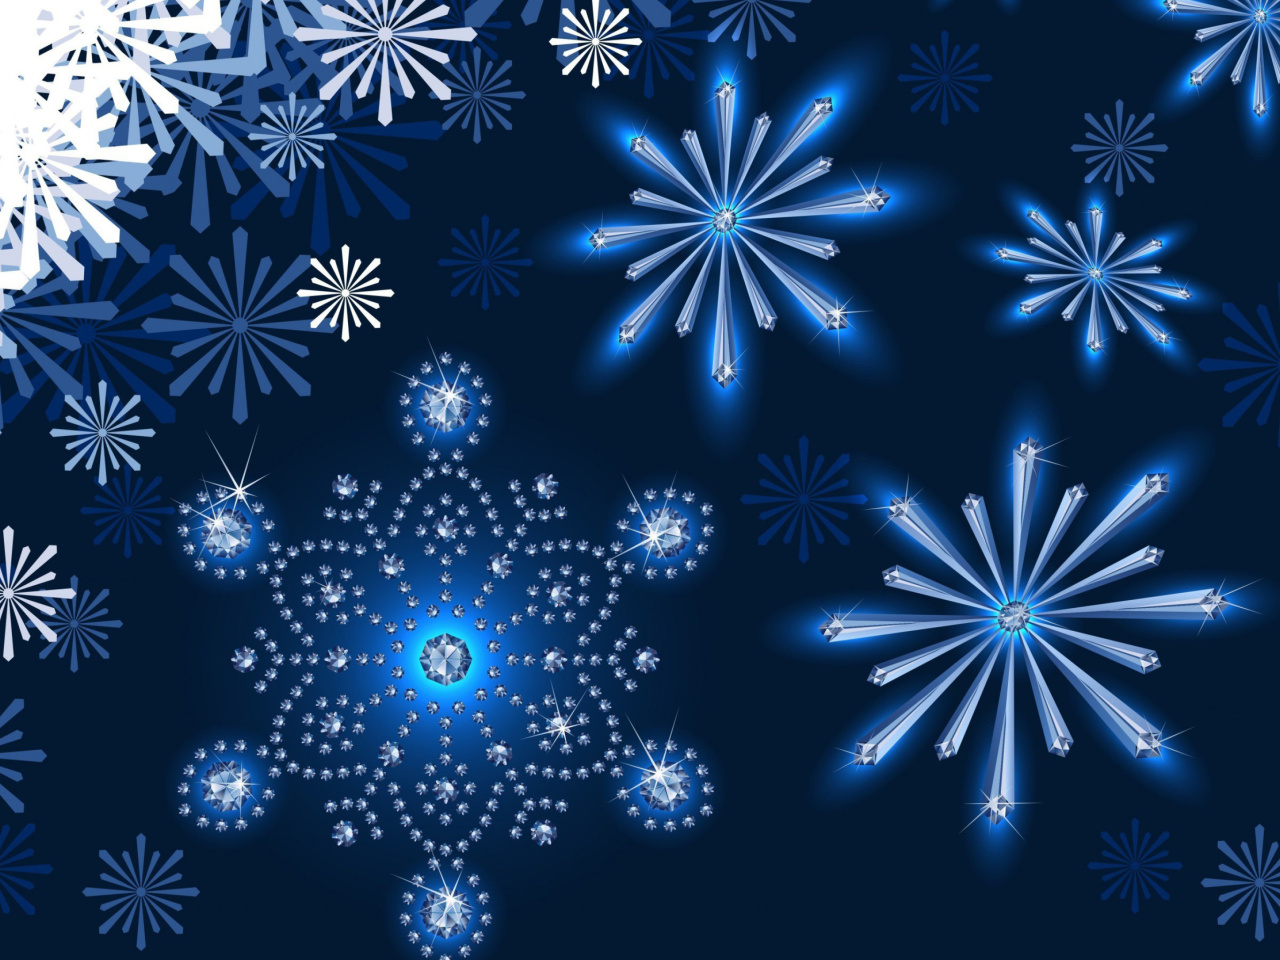 Snowflakes Ornament wallpaper 1280x960